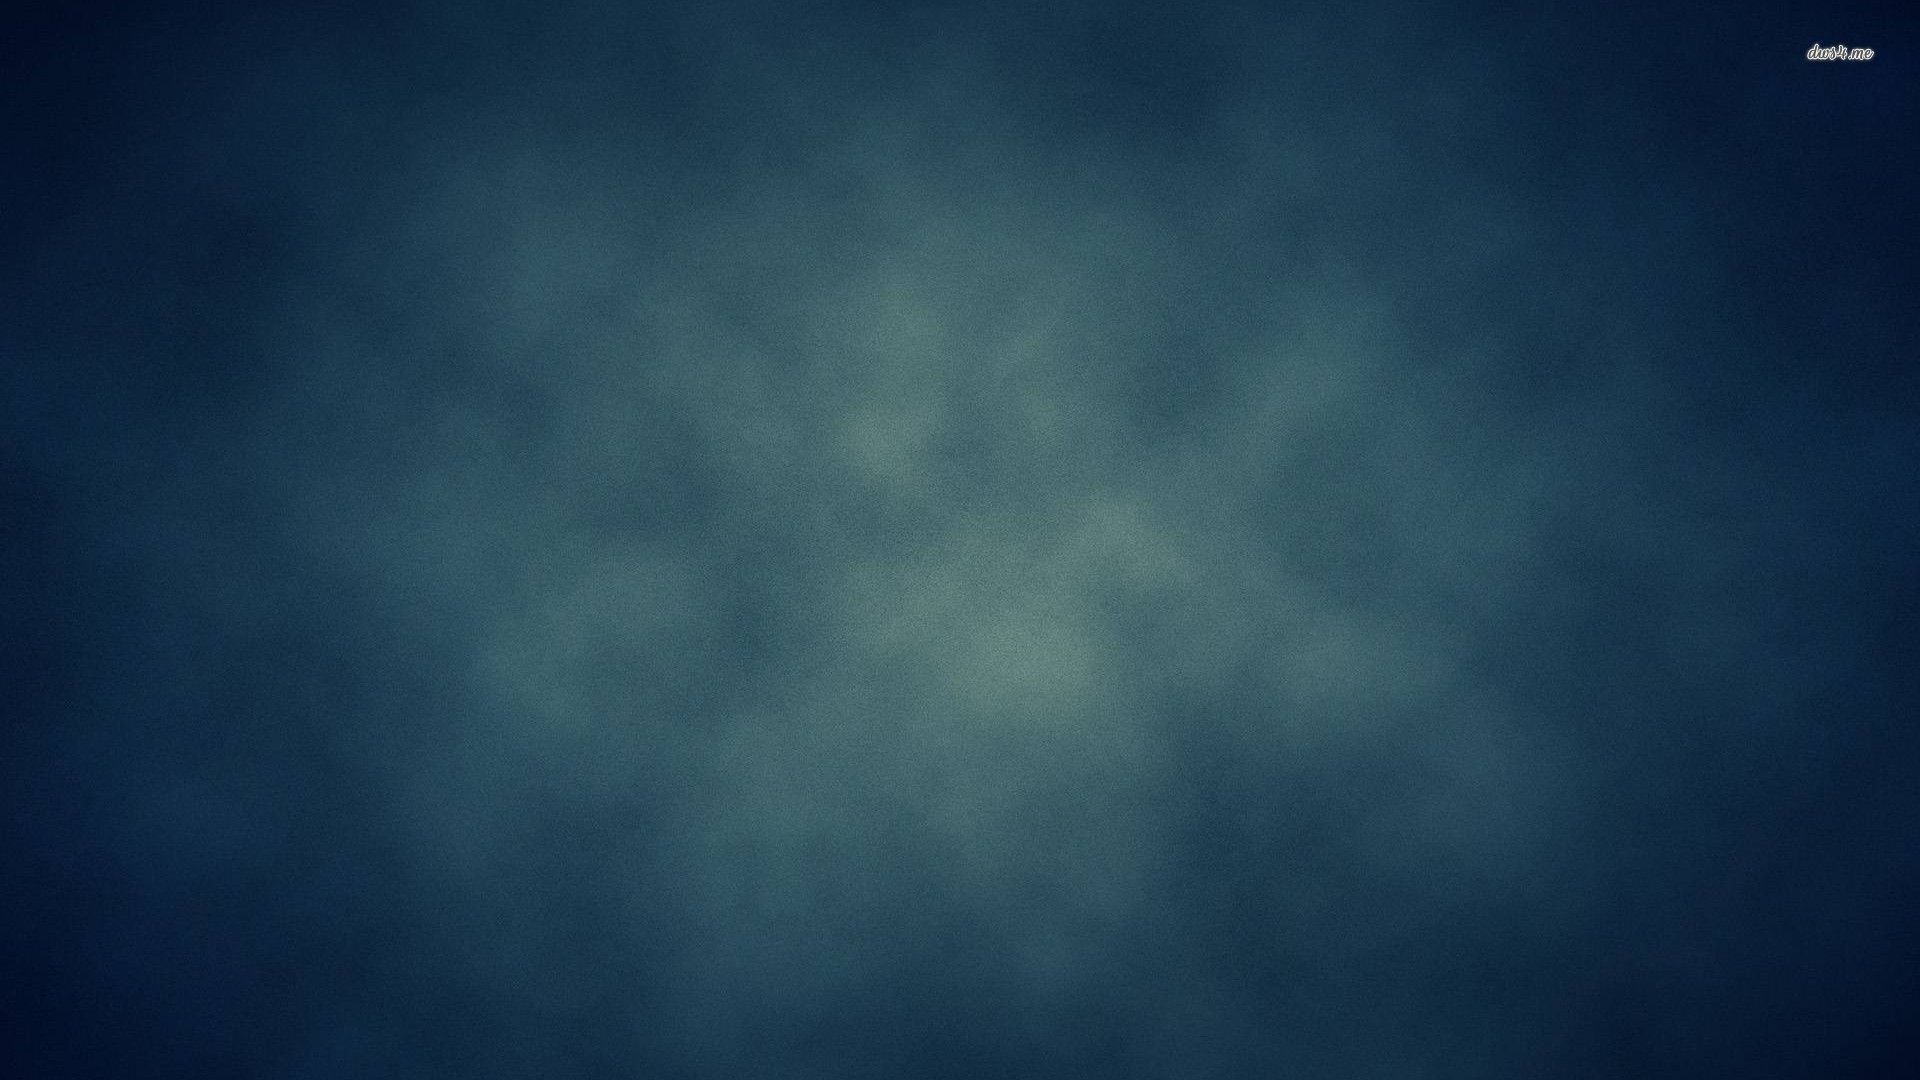 Blue blur wallpaper - Abstract wallpapers